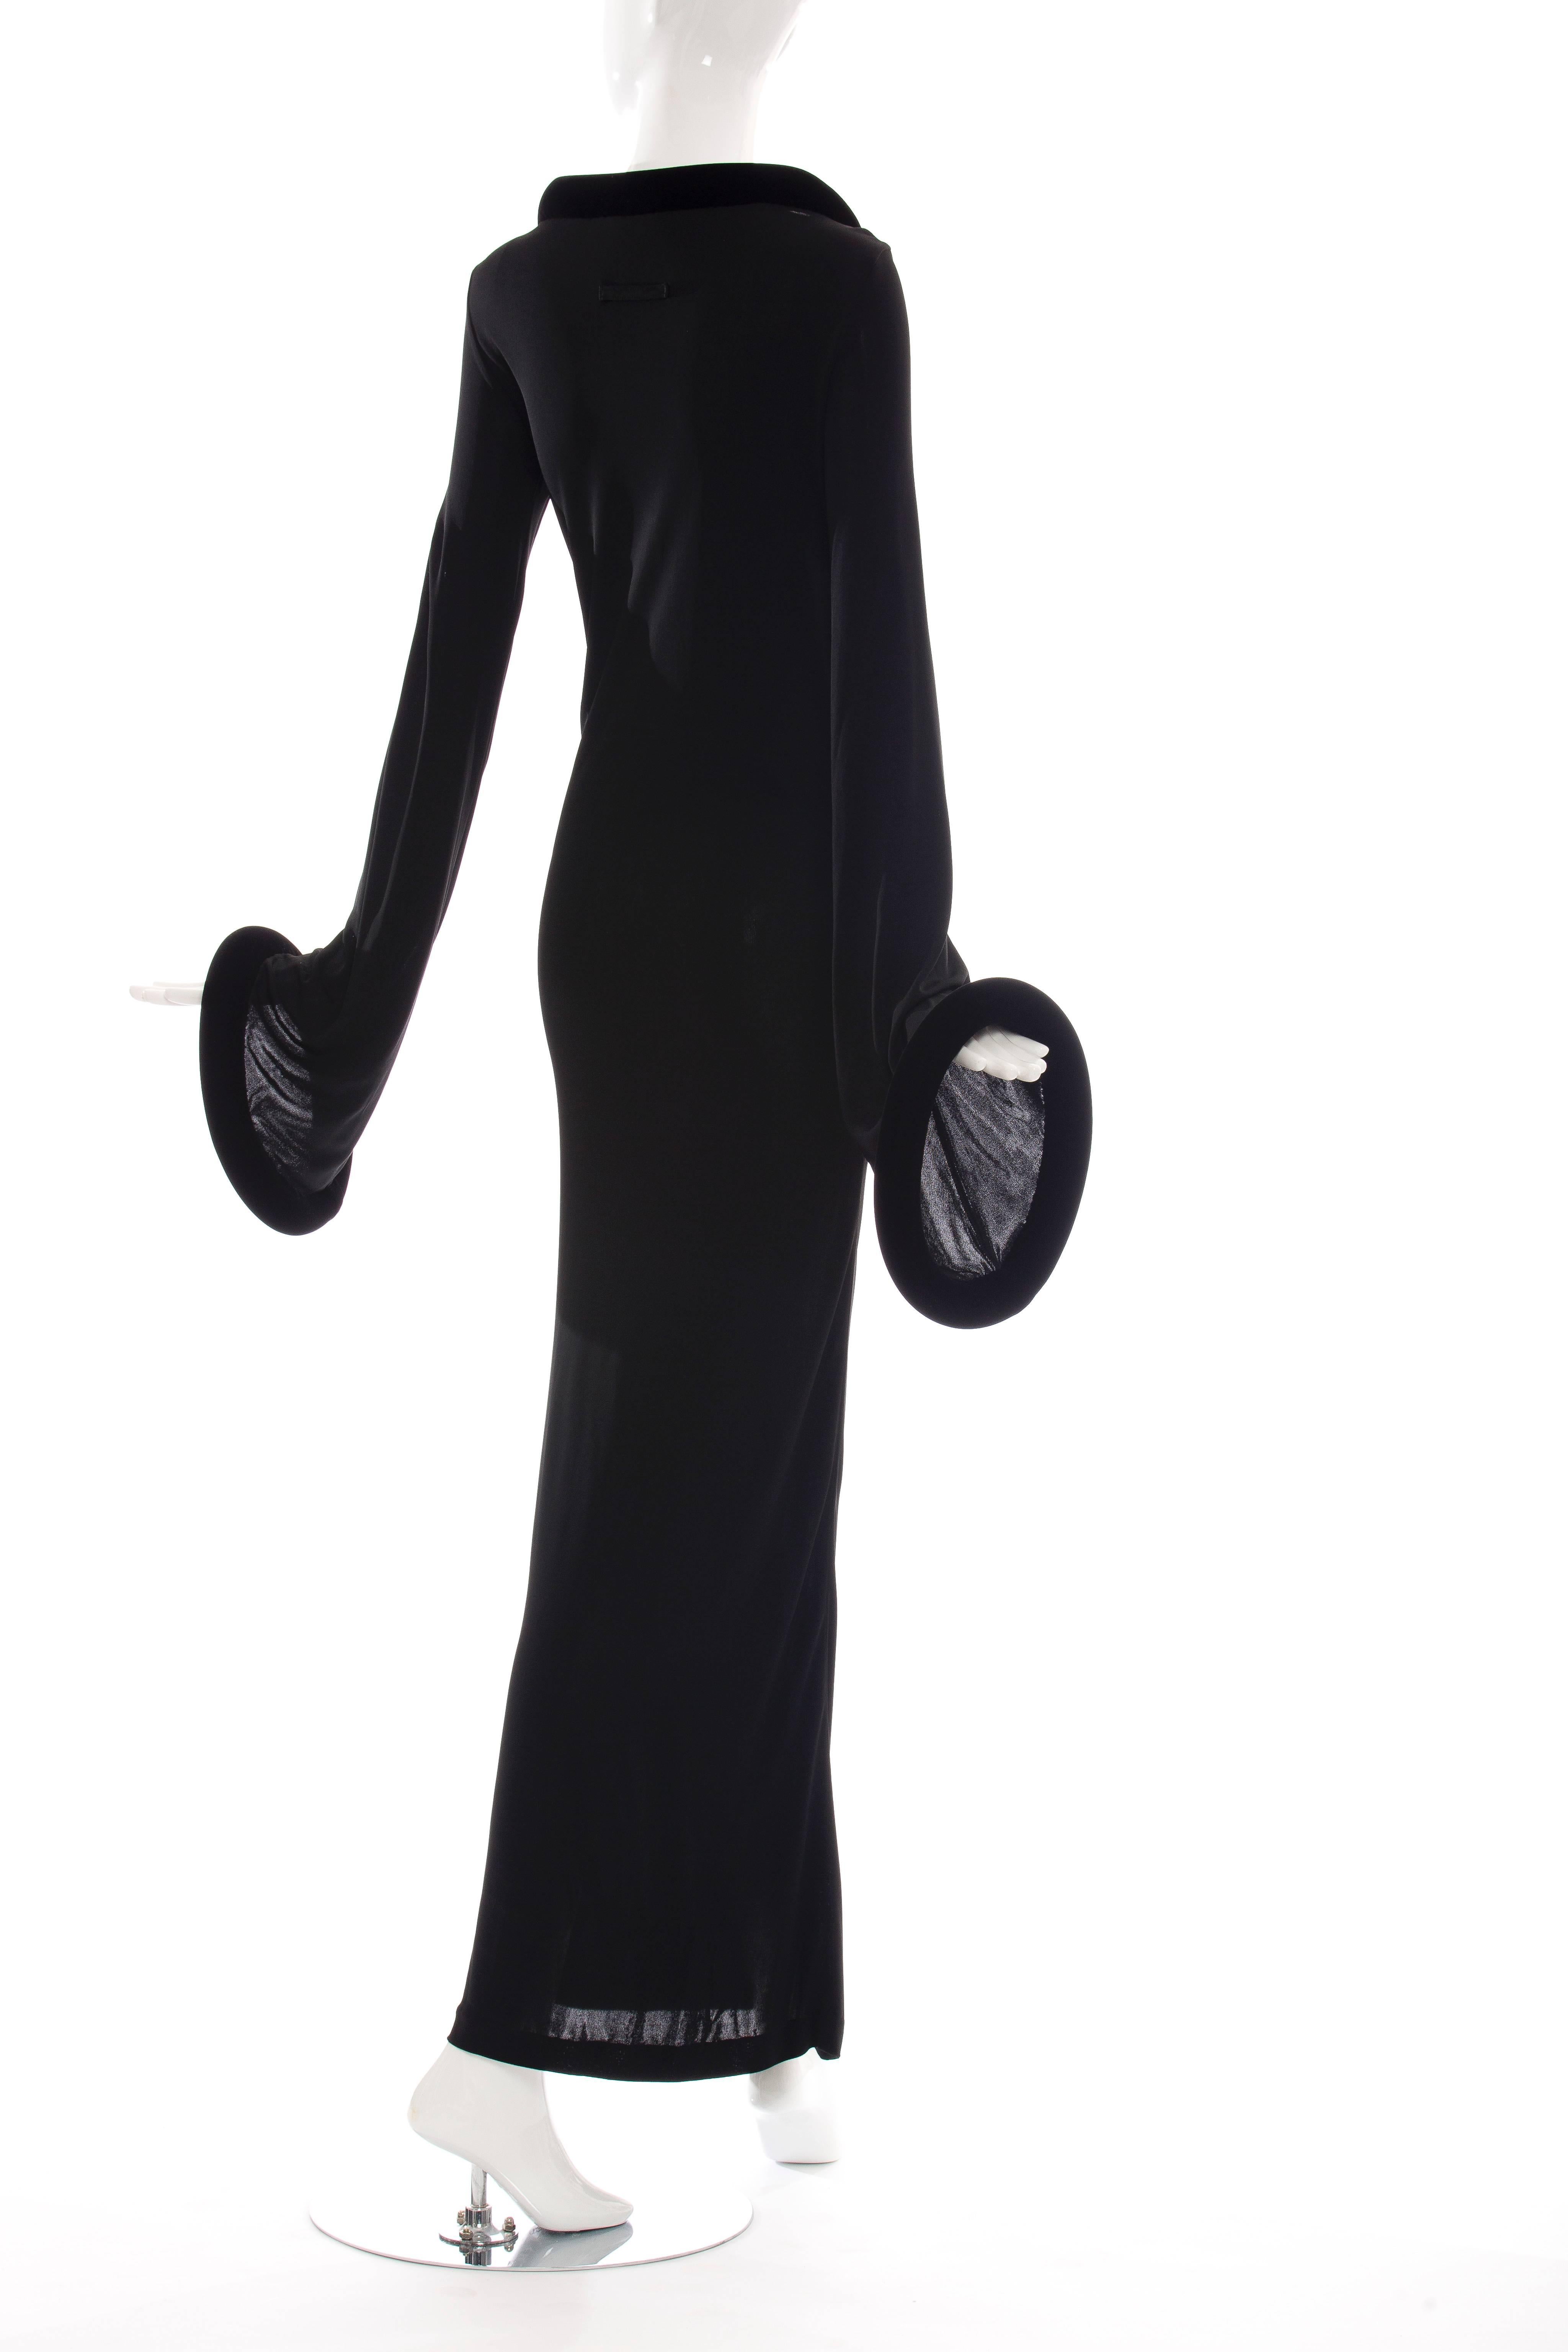 Jean Paul Gaultier Black Long Evening Dress, Circa 1995 2